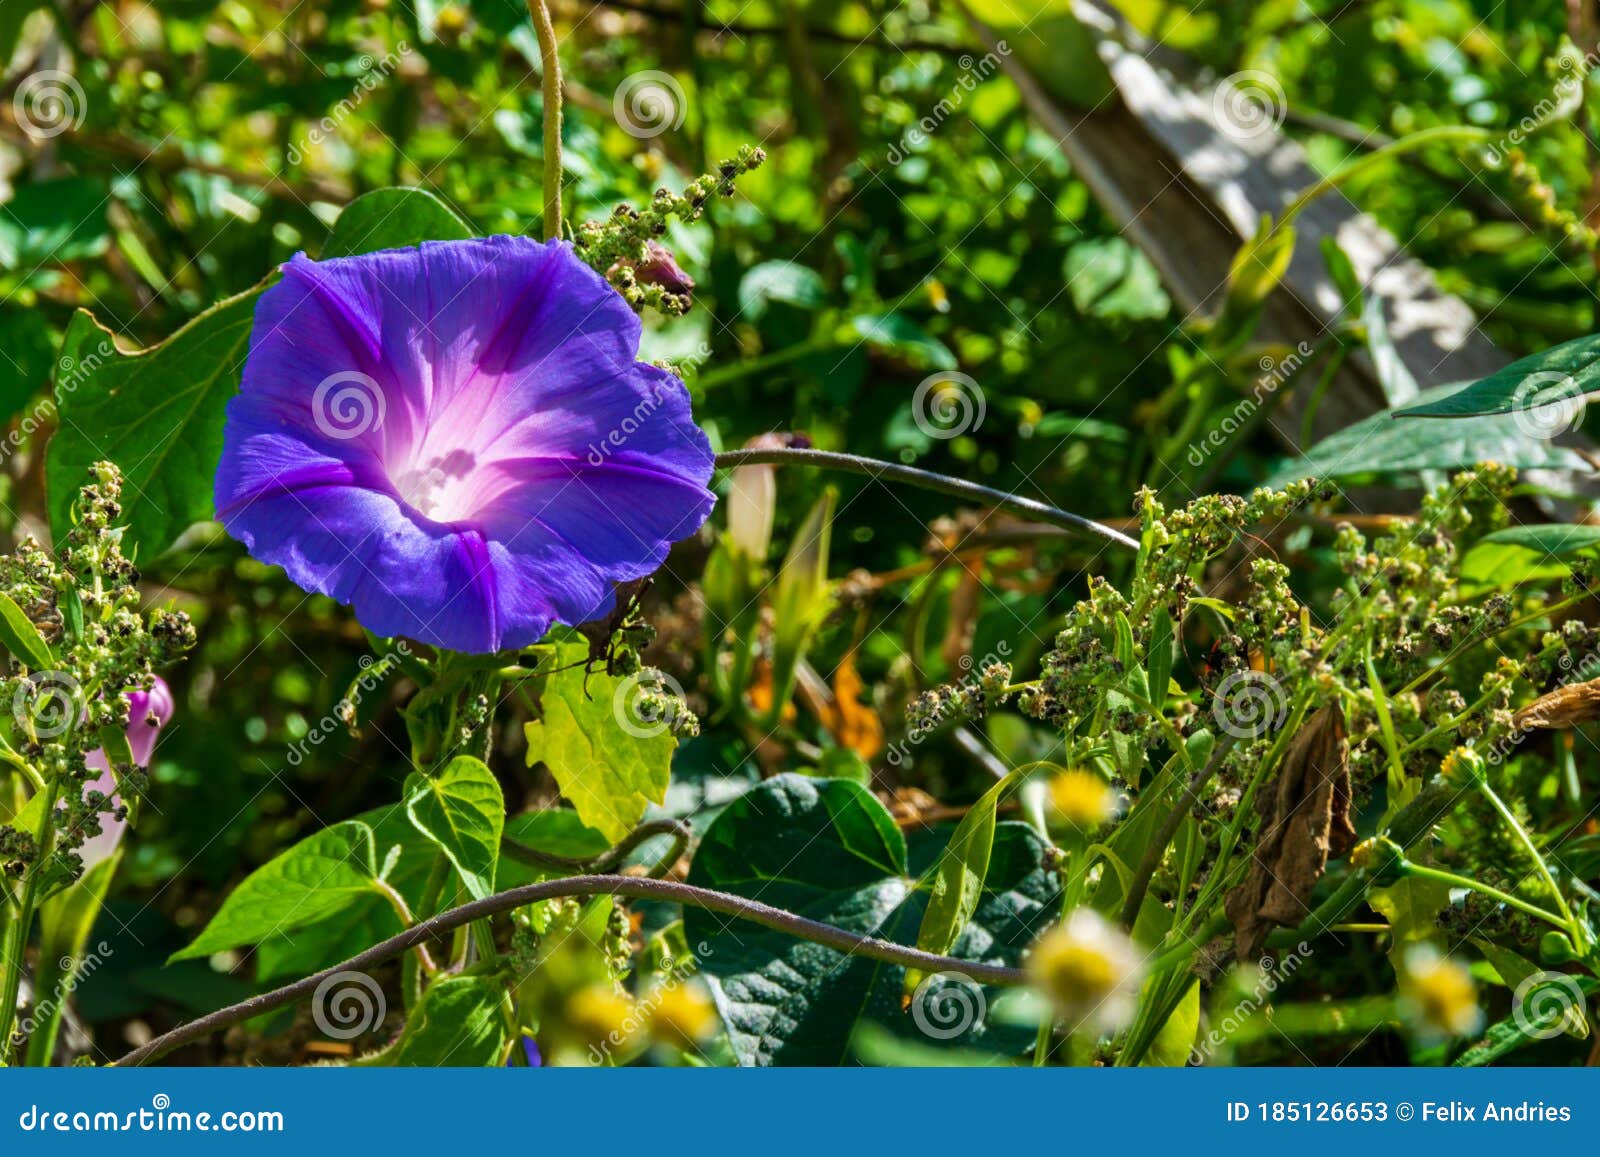 beautiful purple morning glory flower, batatilla, ipomoea violacea